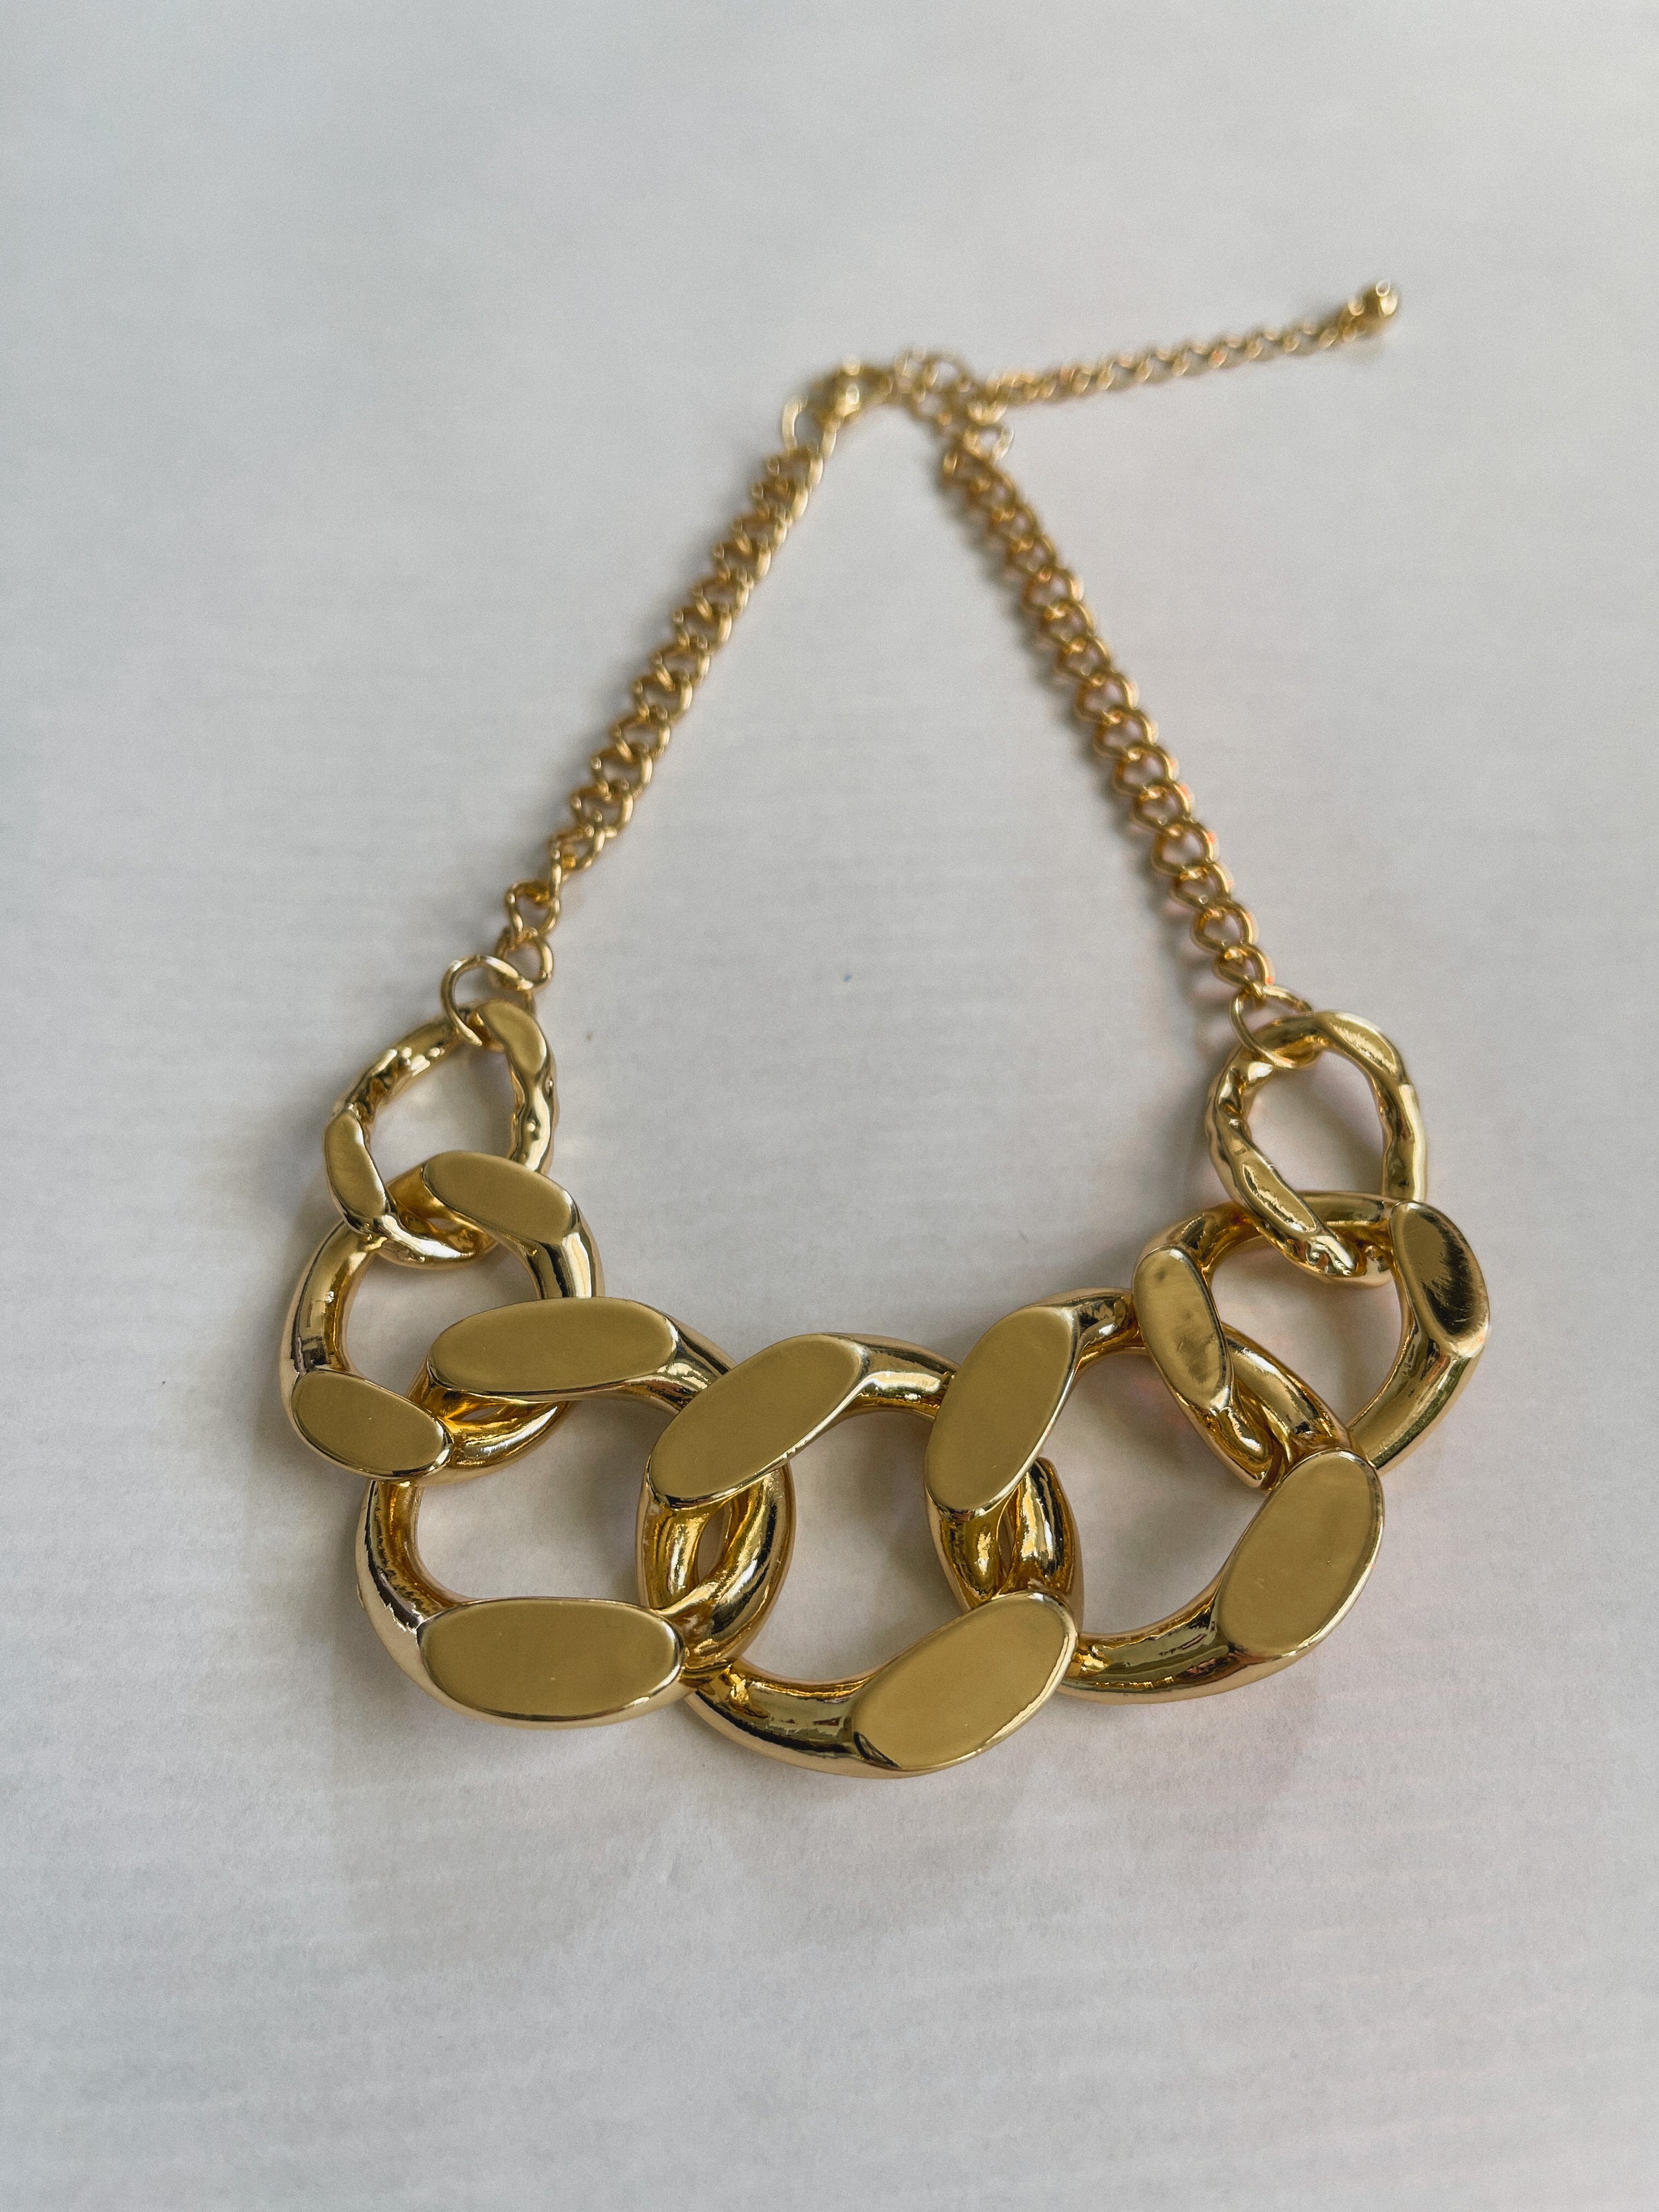 Titanium Necklace with Big Gold Circle Pendant | Nonita Jewelry